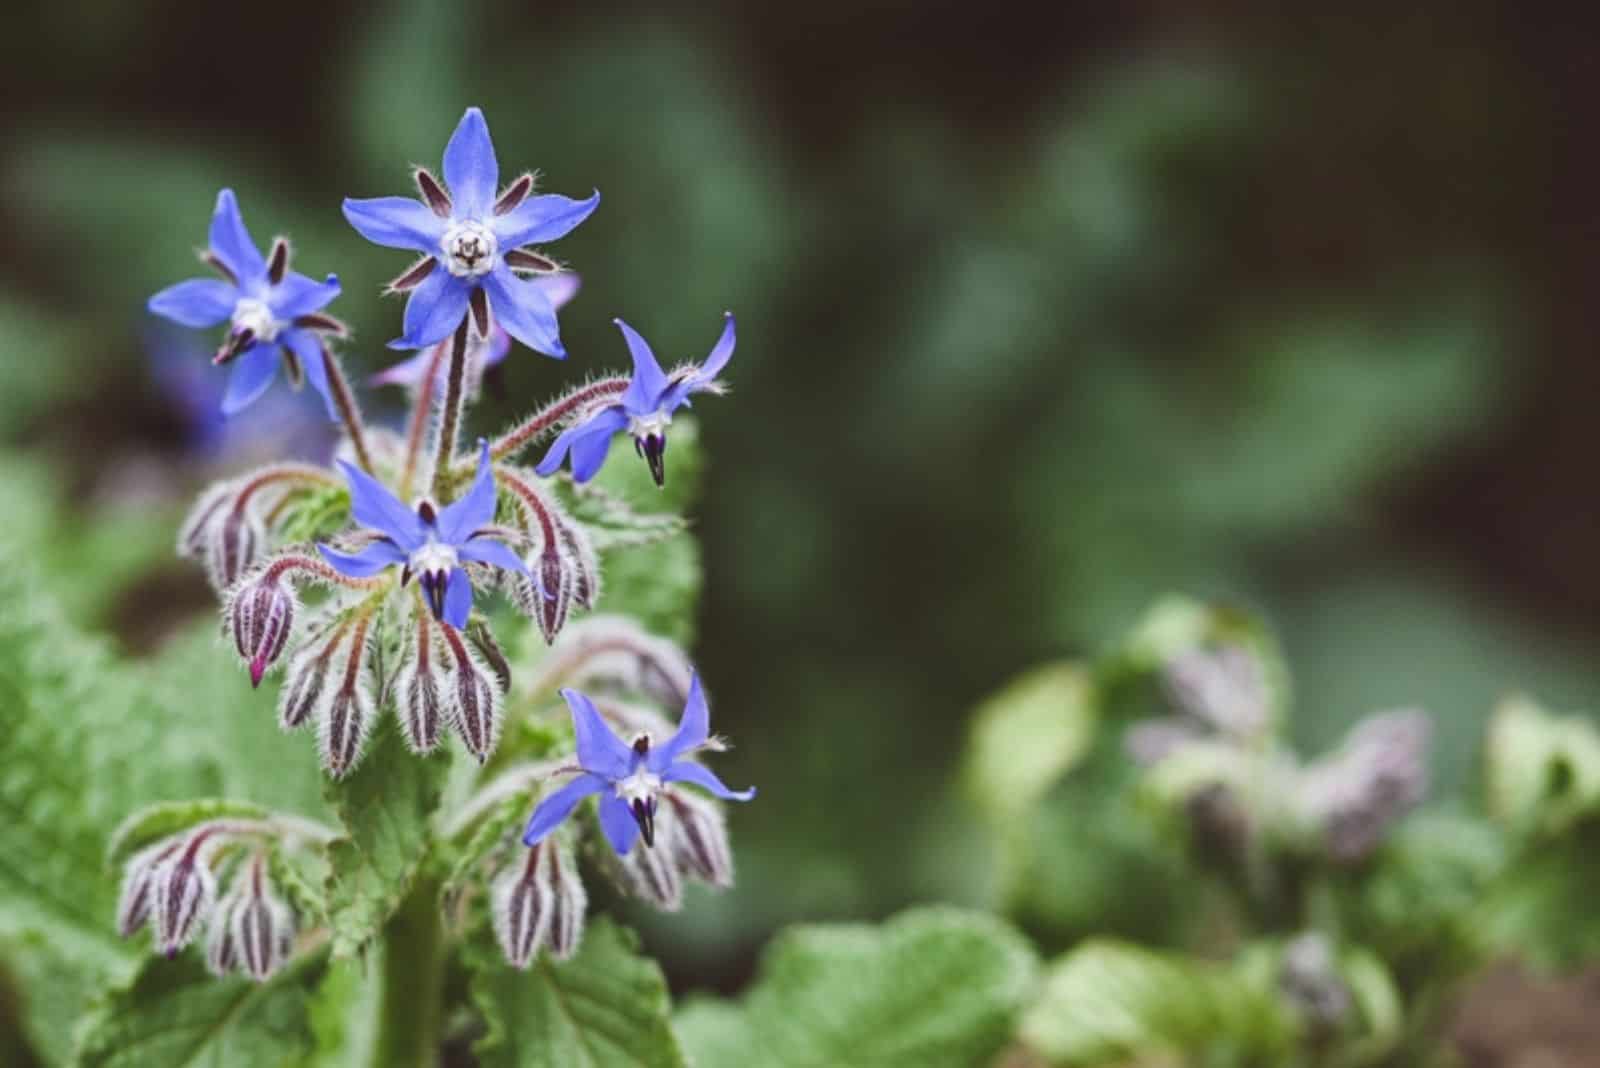 Beautiful close-up of a borage flower